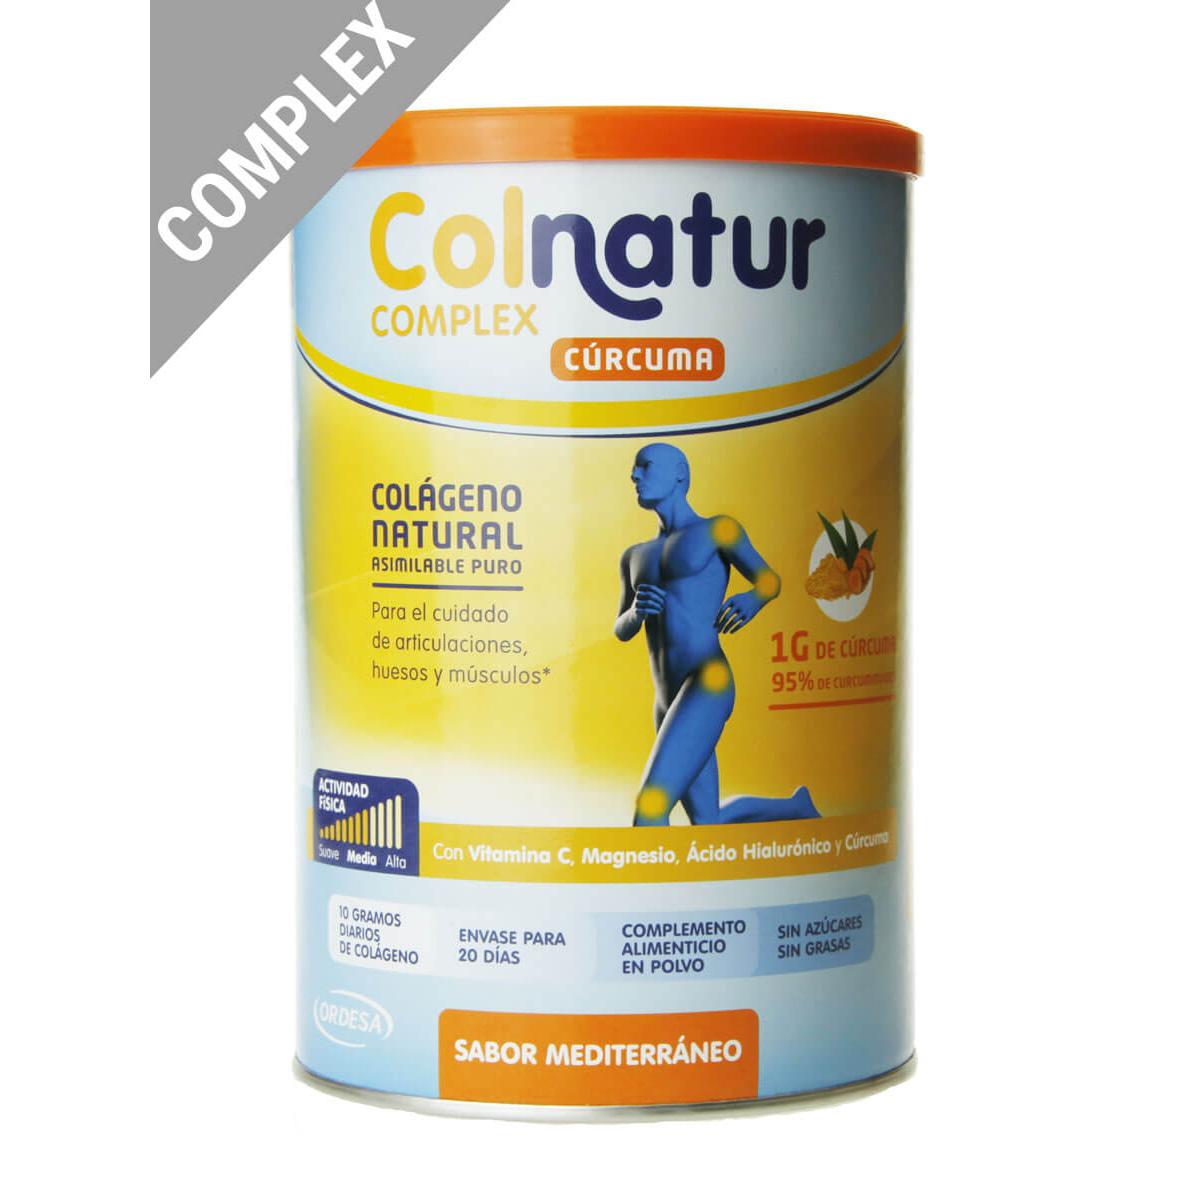 Colnatur - Colnatur complex cúrcuma sabor mediterráneo 250 gr